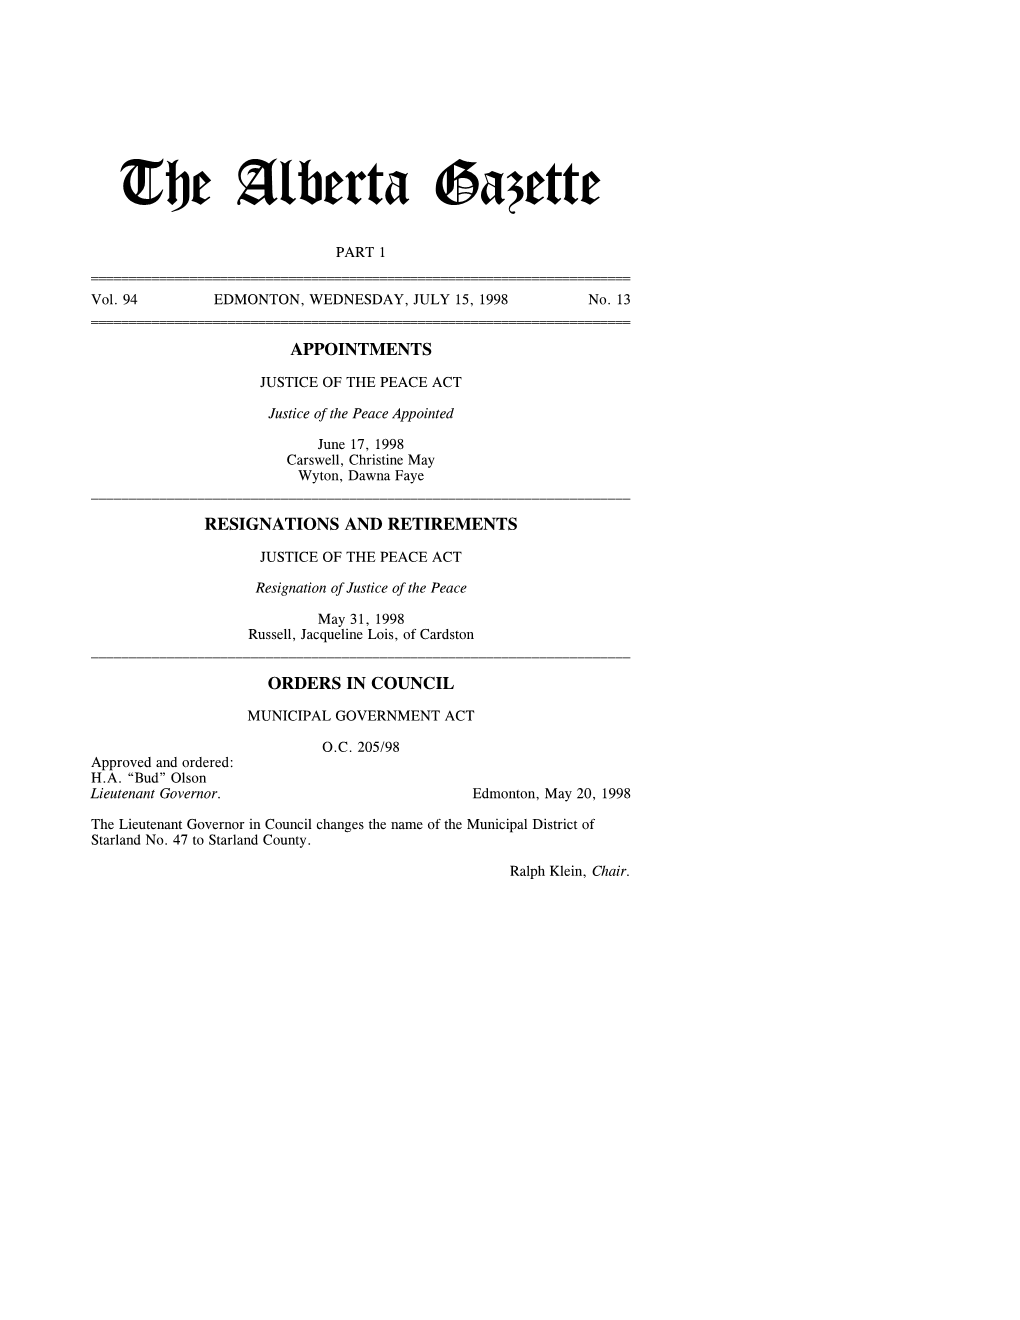 The Alberta Gazette, Part I, July 15, 1998